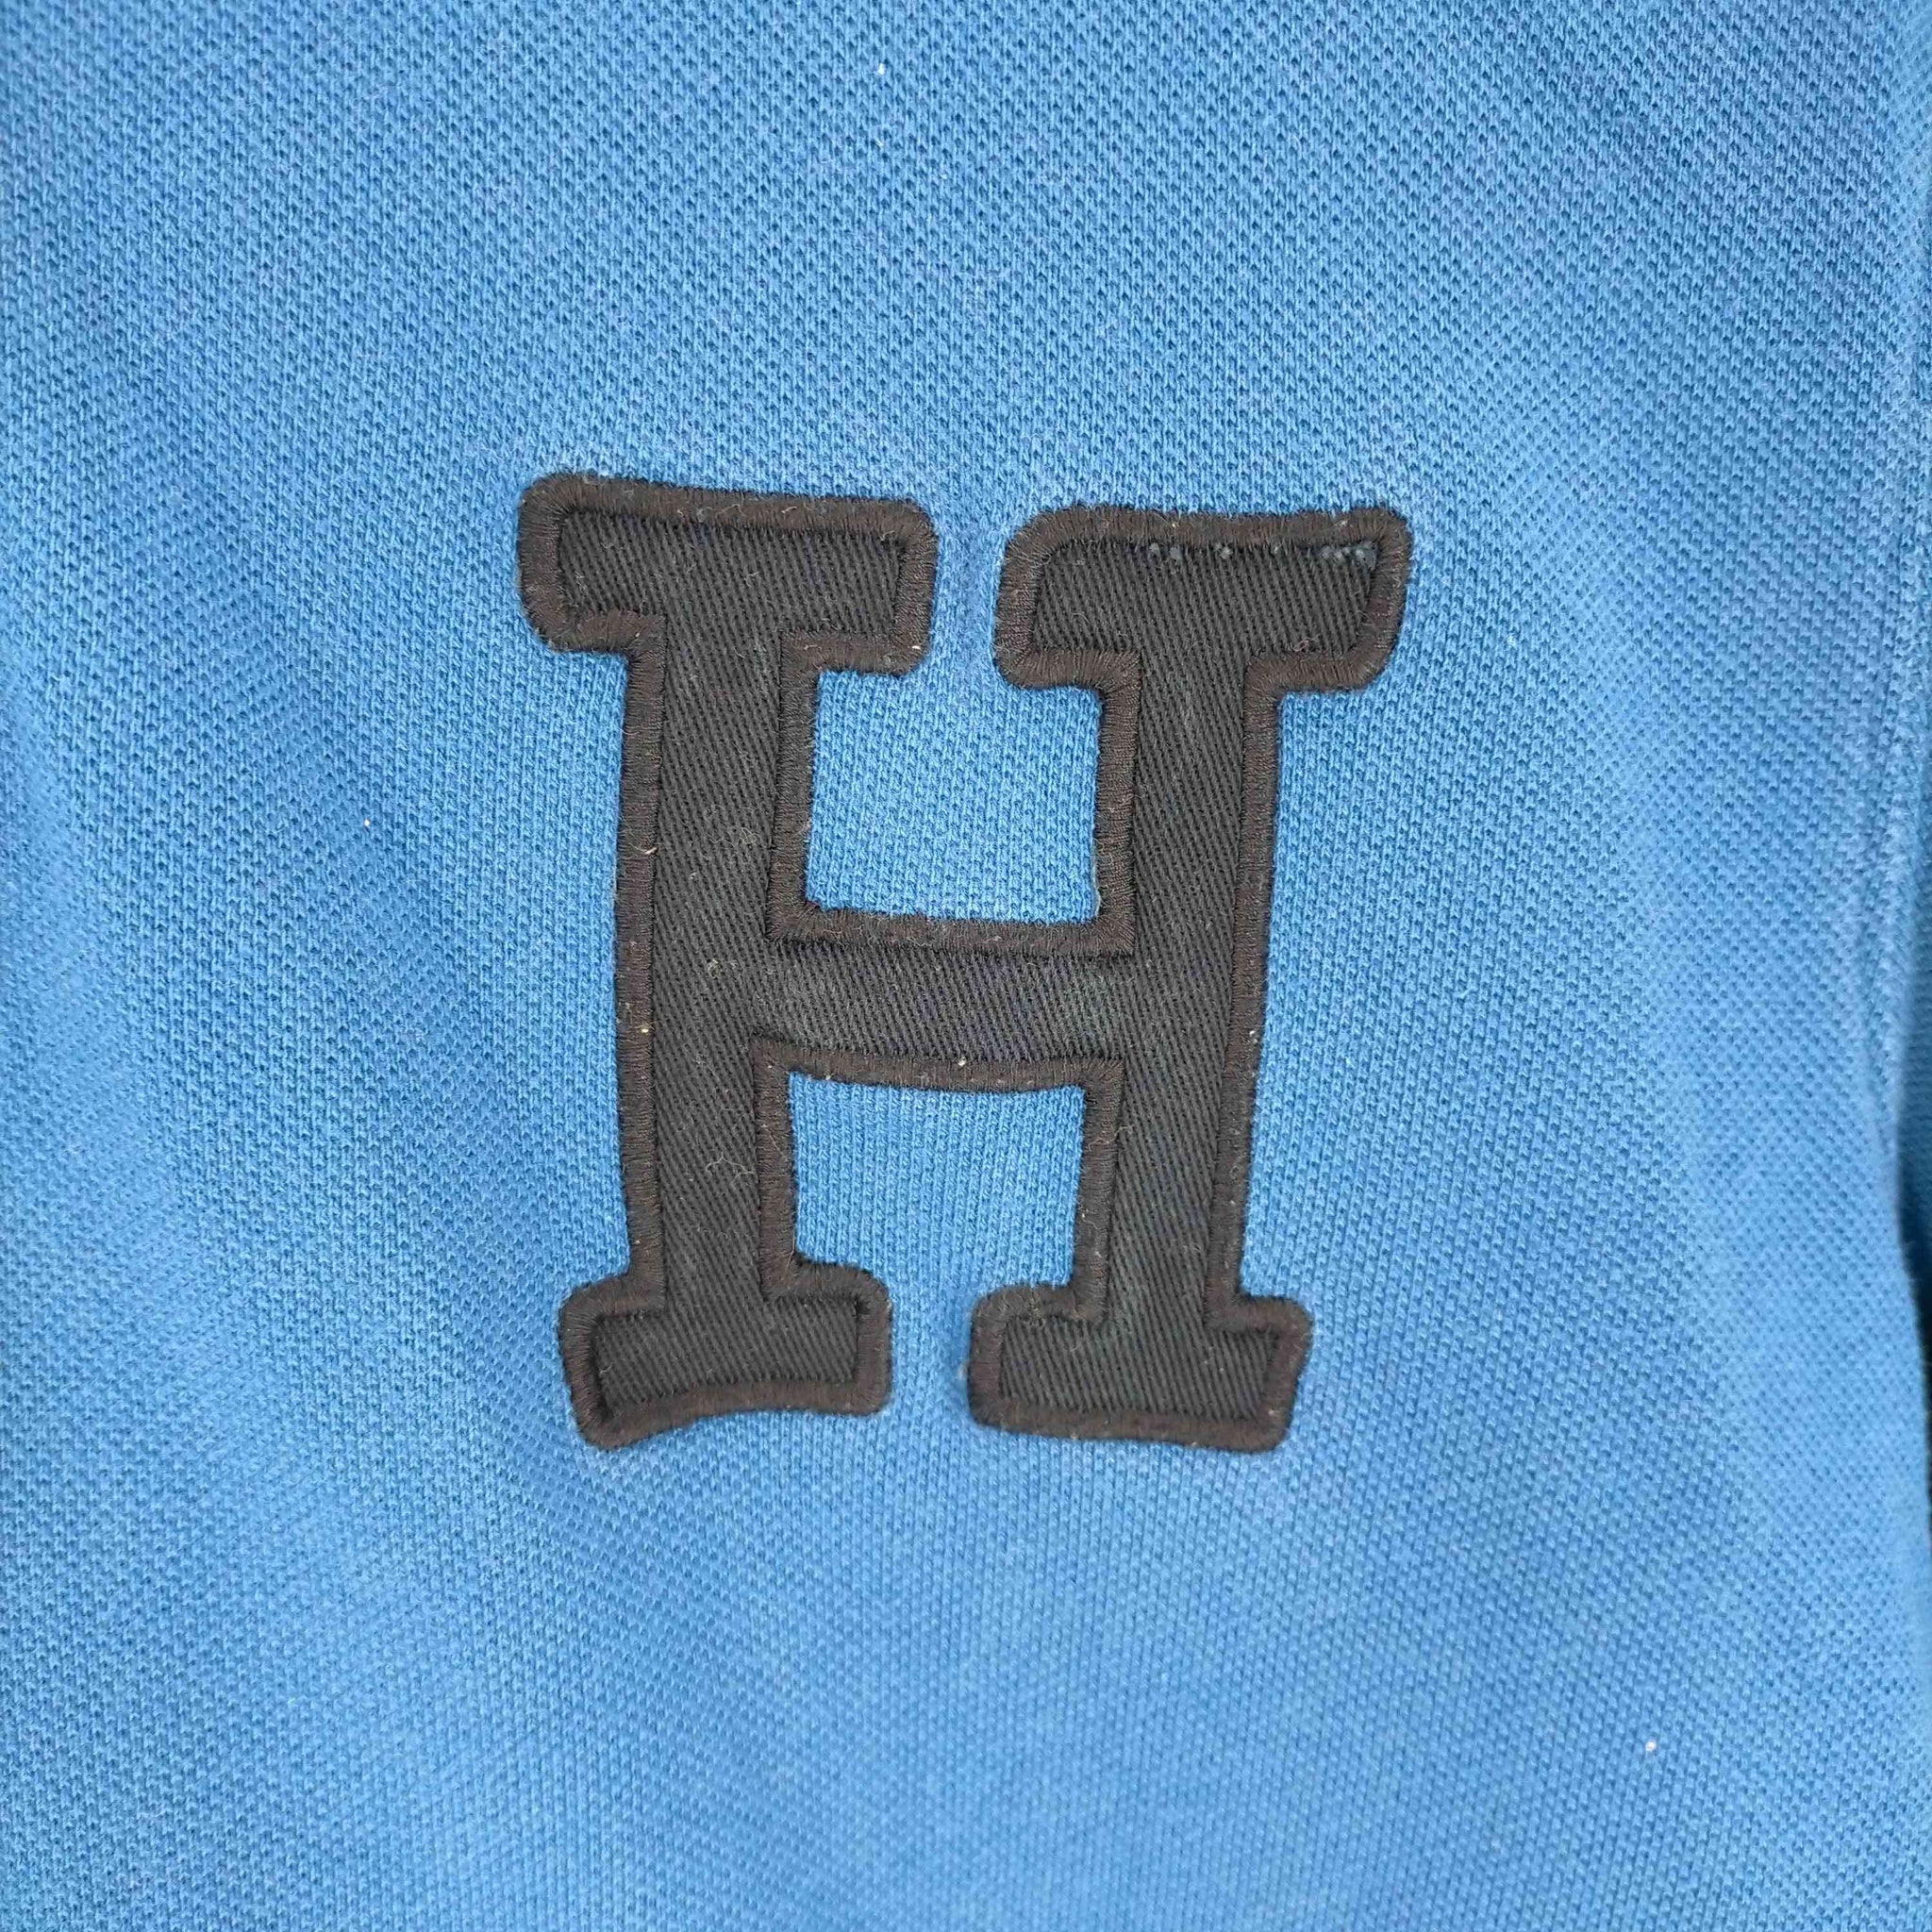 TOMMY HILFIGER(トミーヒルフィガー)H刺繍 ポロシャツ